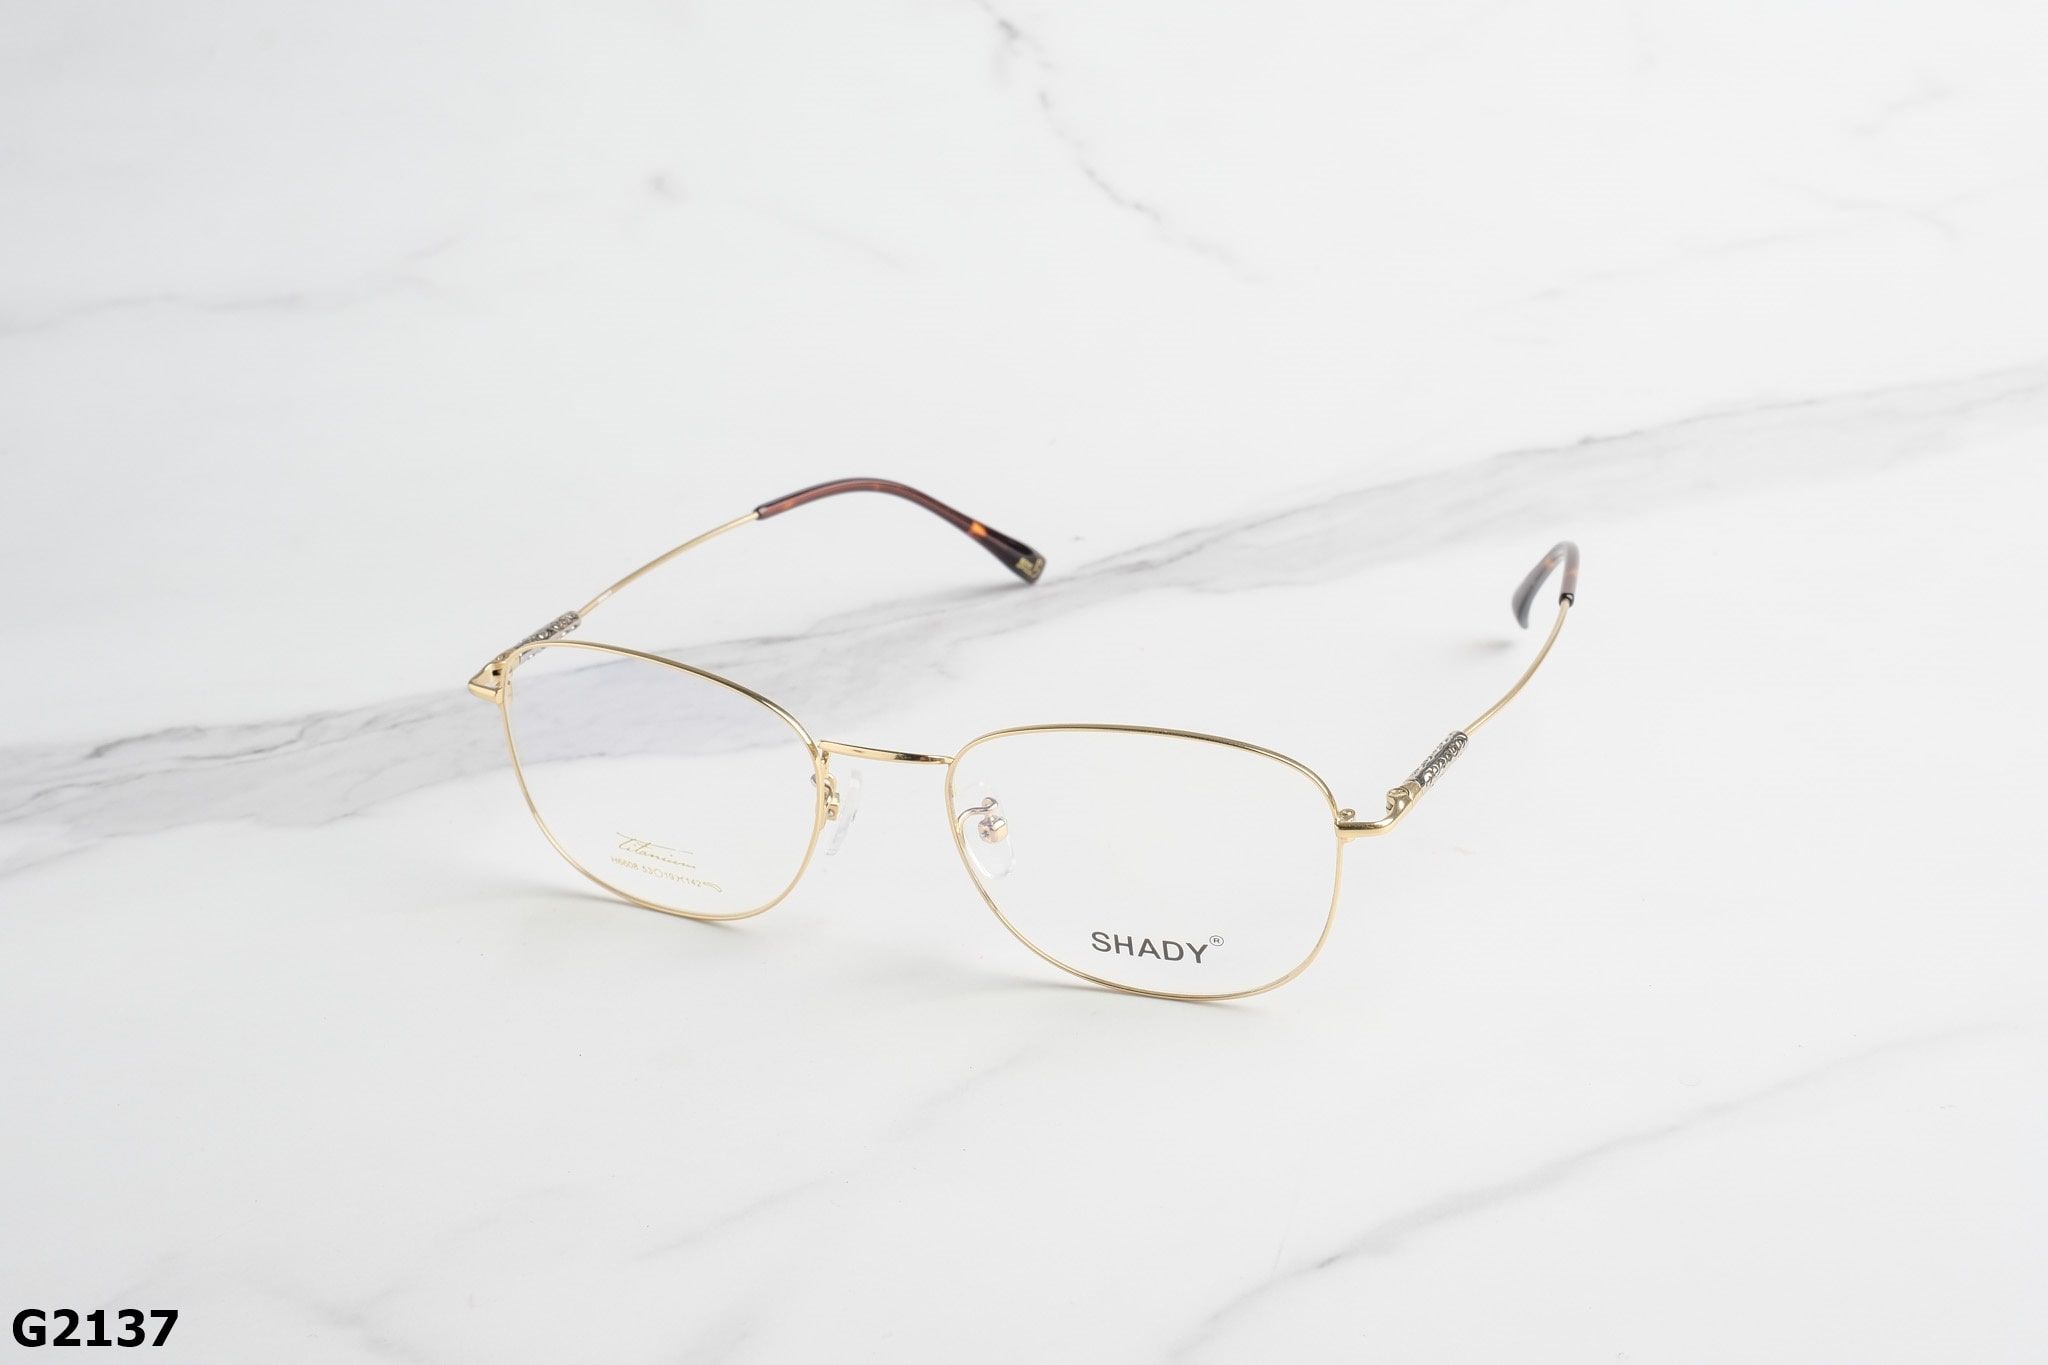  SHADY Eyewear - Glasses - G2137 